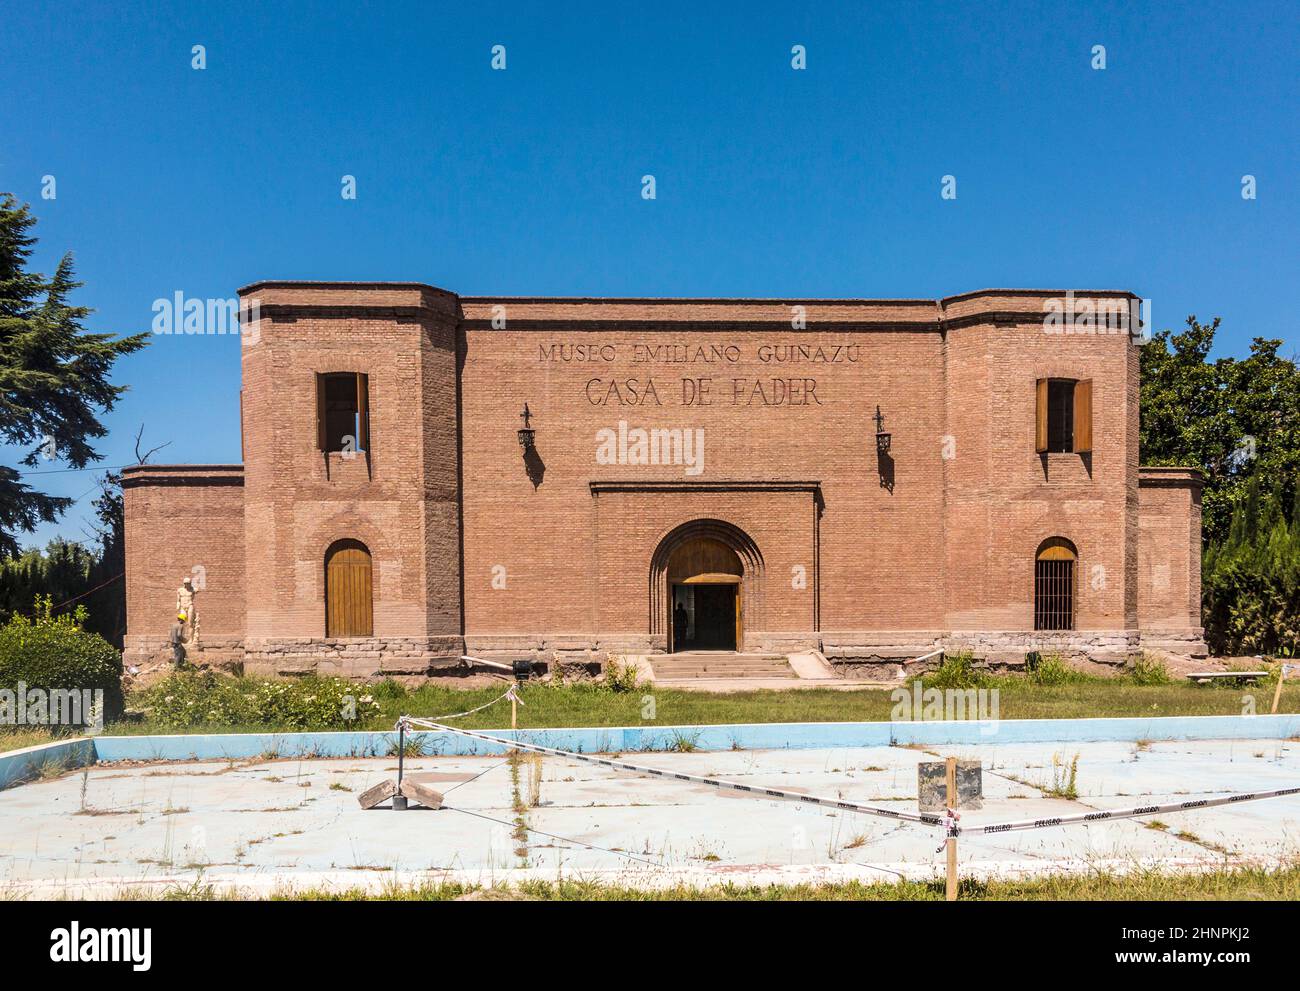 acade des Museo Emiliano Guinazu, casa de Fader in Mendoza, Argentinien. Der Garten des Museums befindet sich im Bau Stockfoto